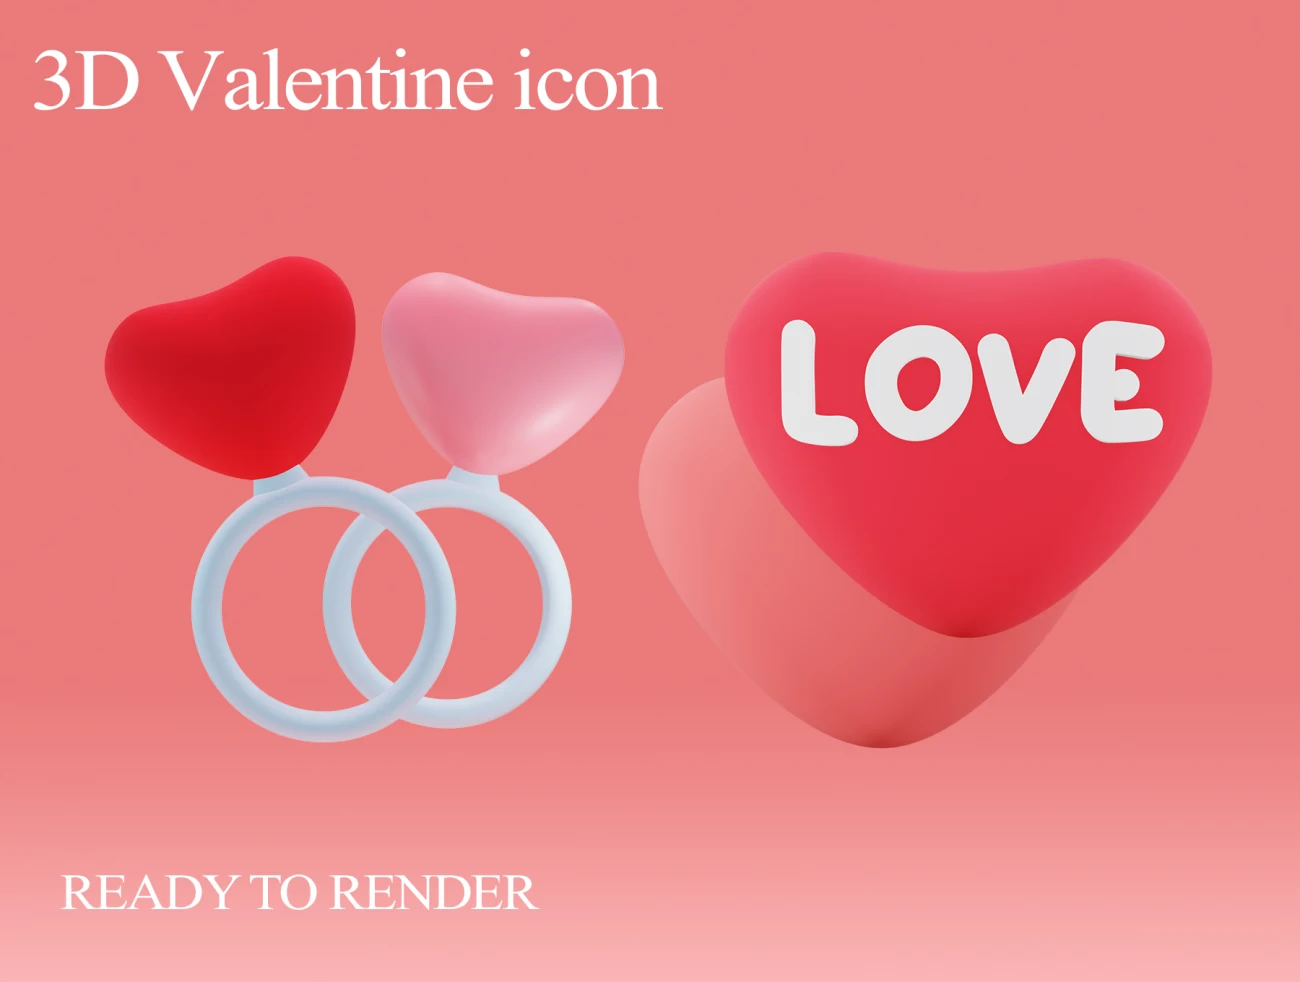 3D情人节图标素材下载 3D Valentine Icon .blender .png插图11